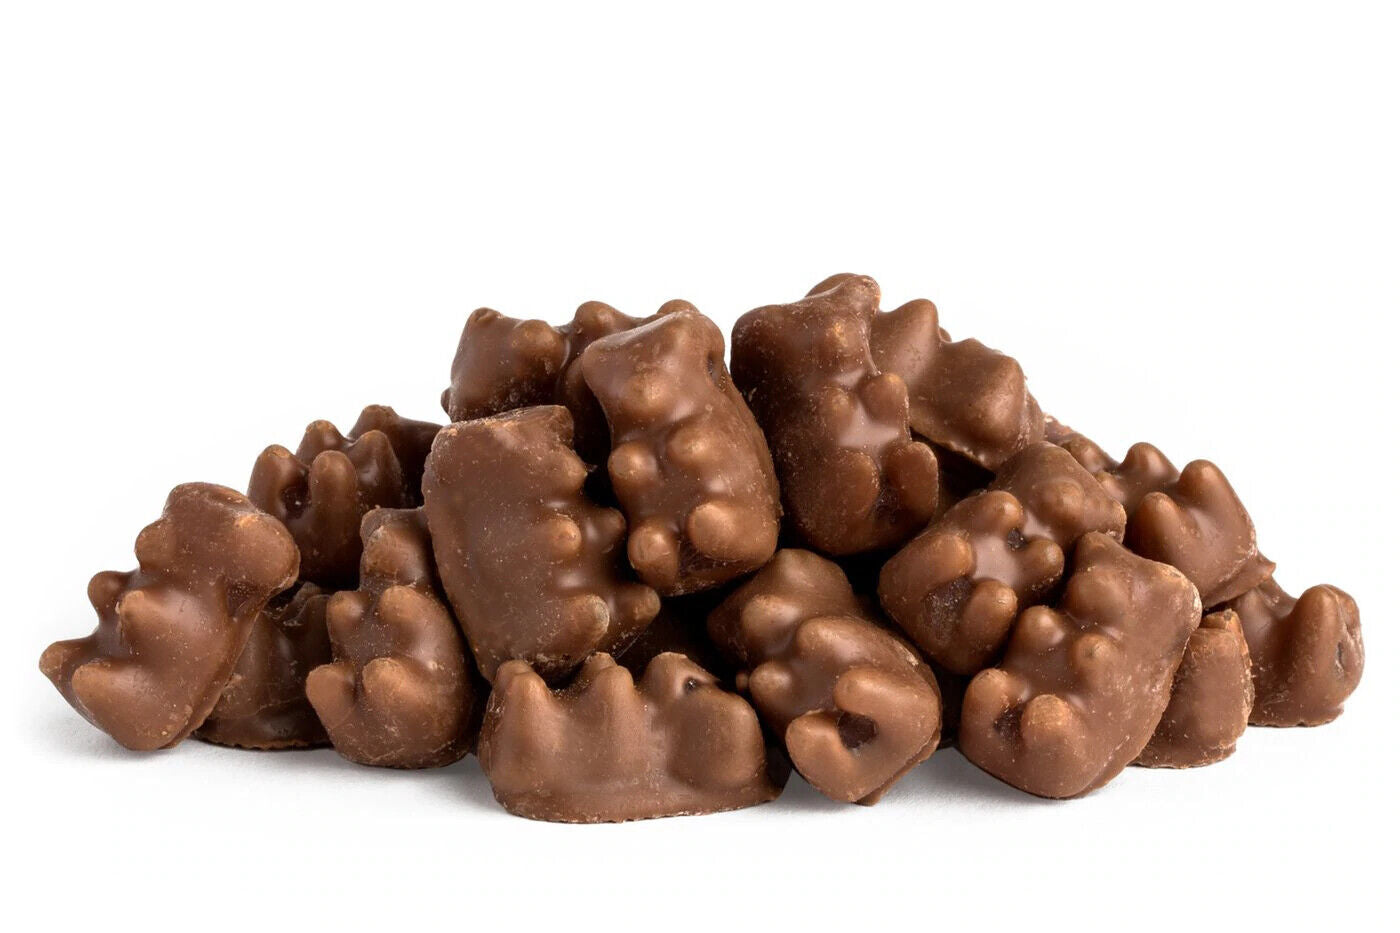 Kopper's Milk Chocolate Covered Gummy Bears